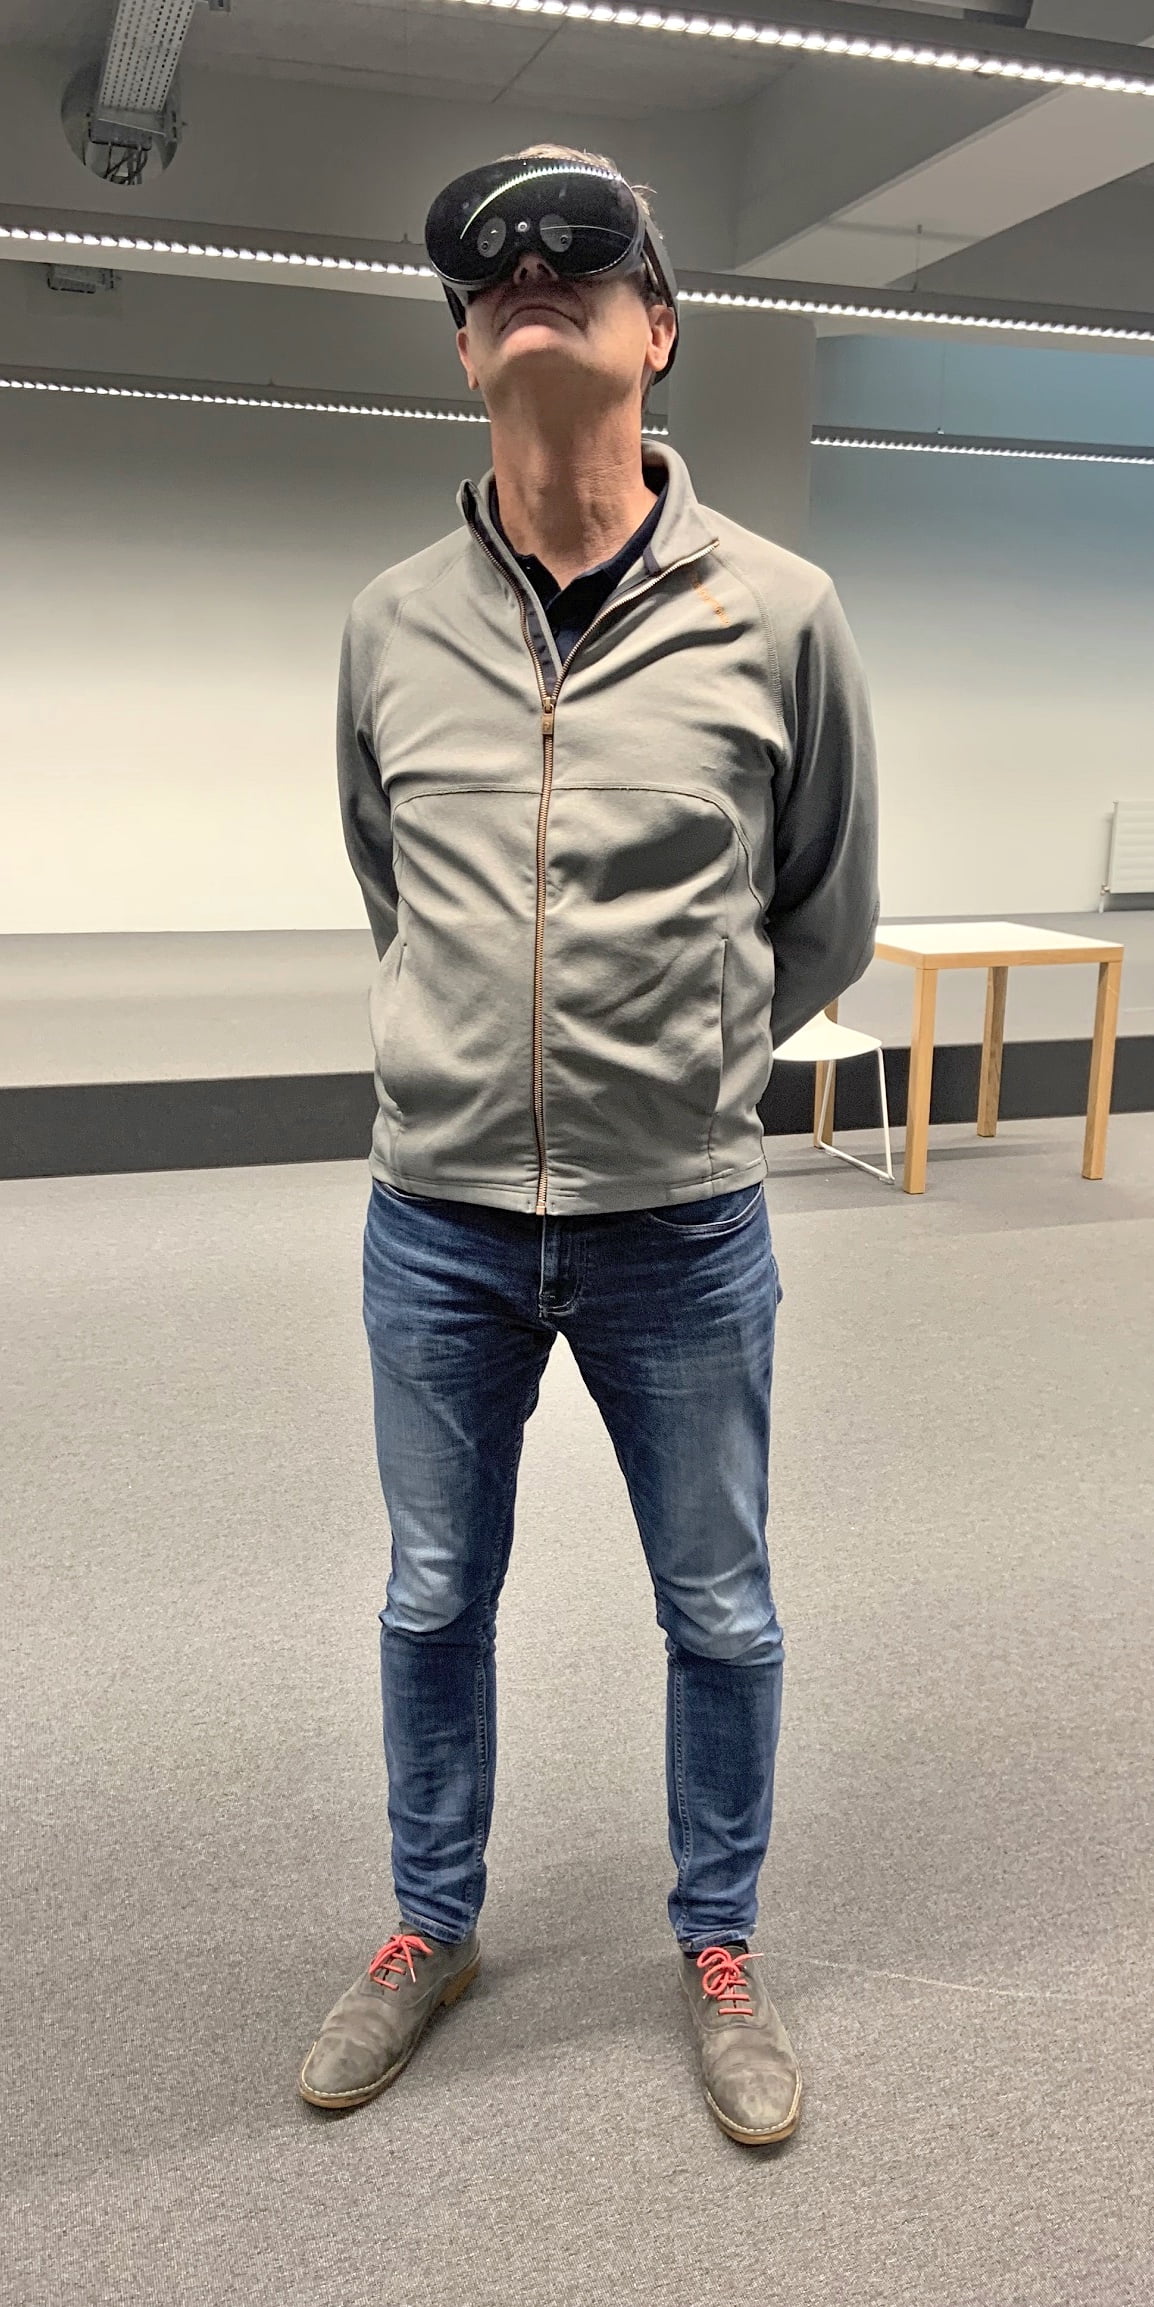 Andreas Straube mit VR-Brille